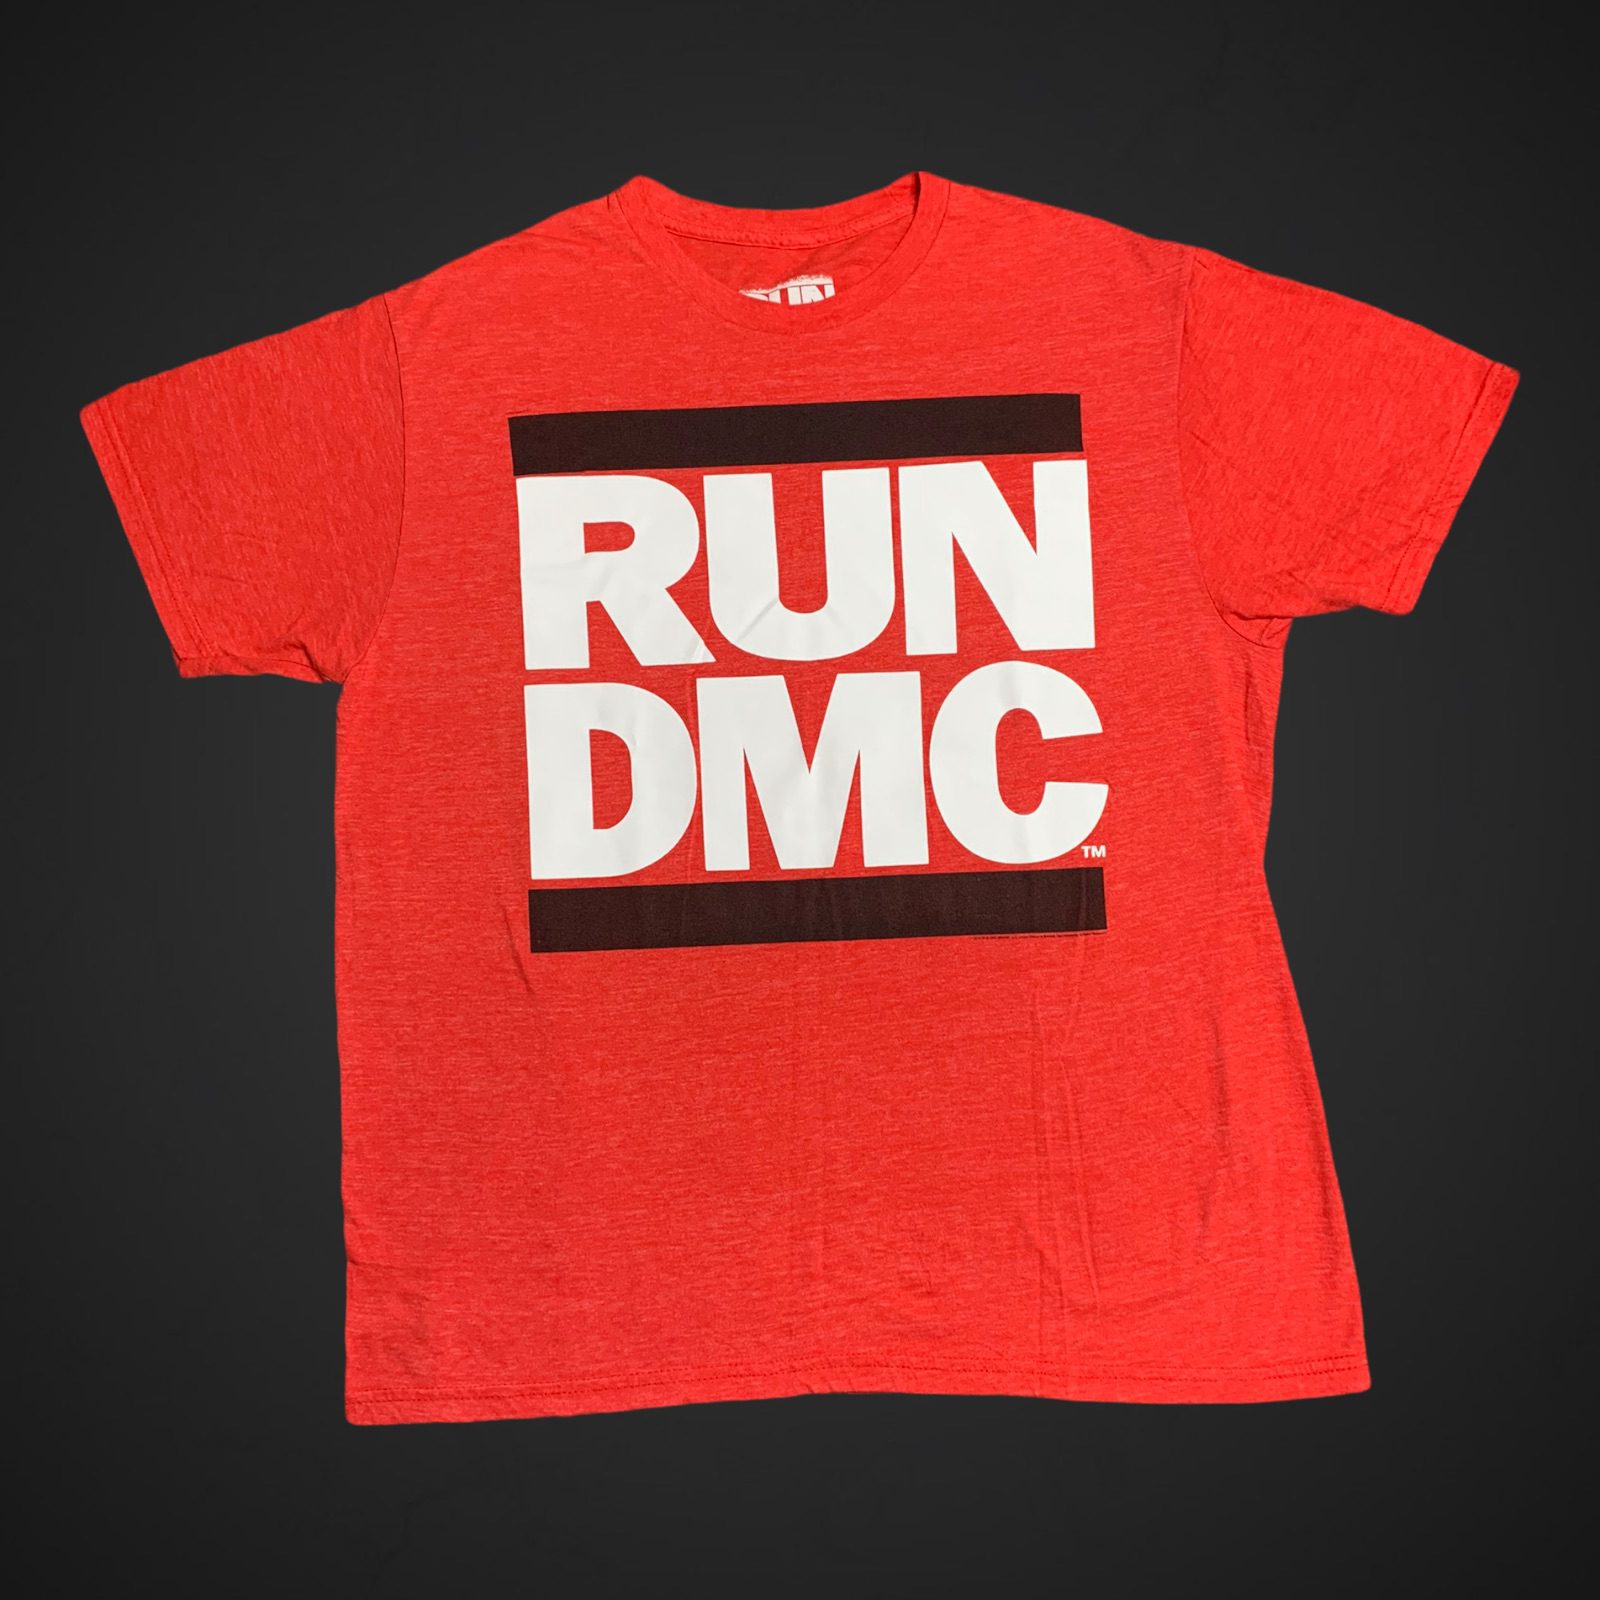 Run DMC Men's Red T-Shirt Size Large